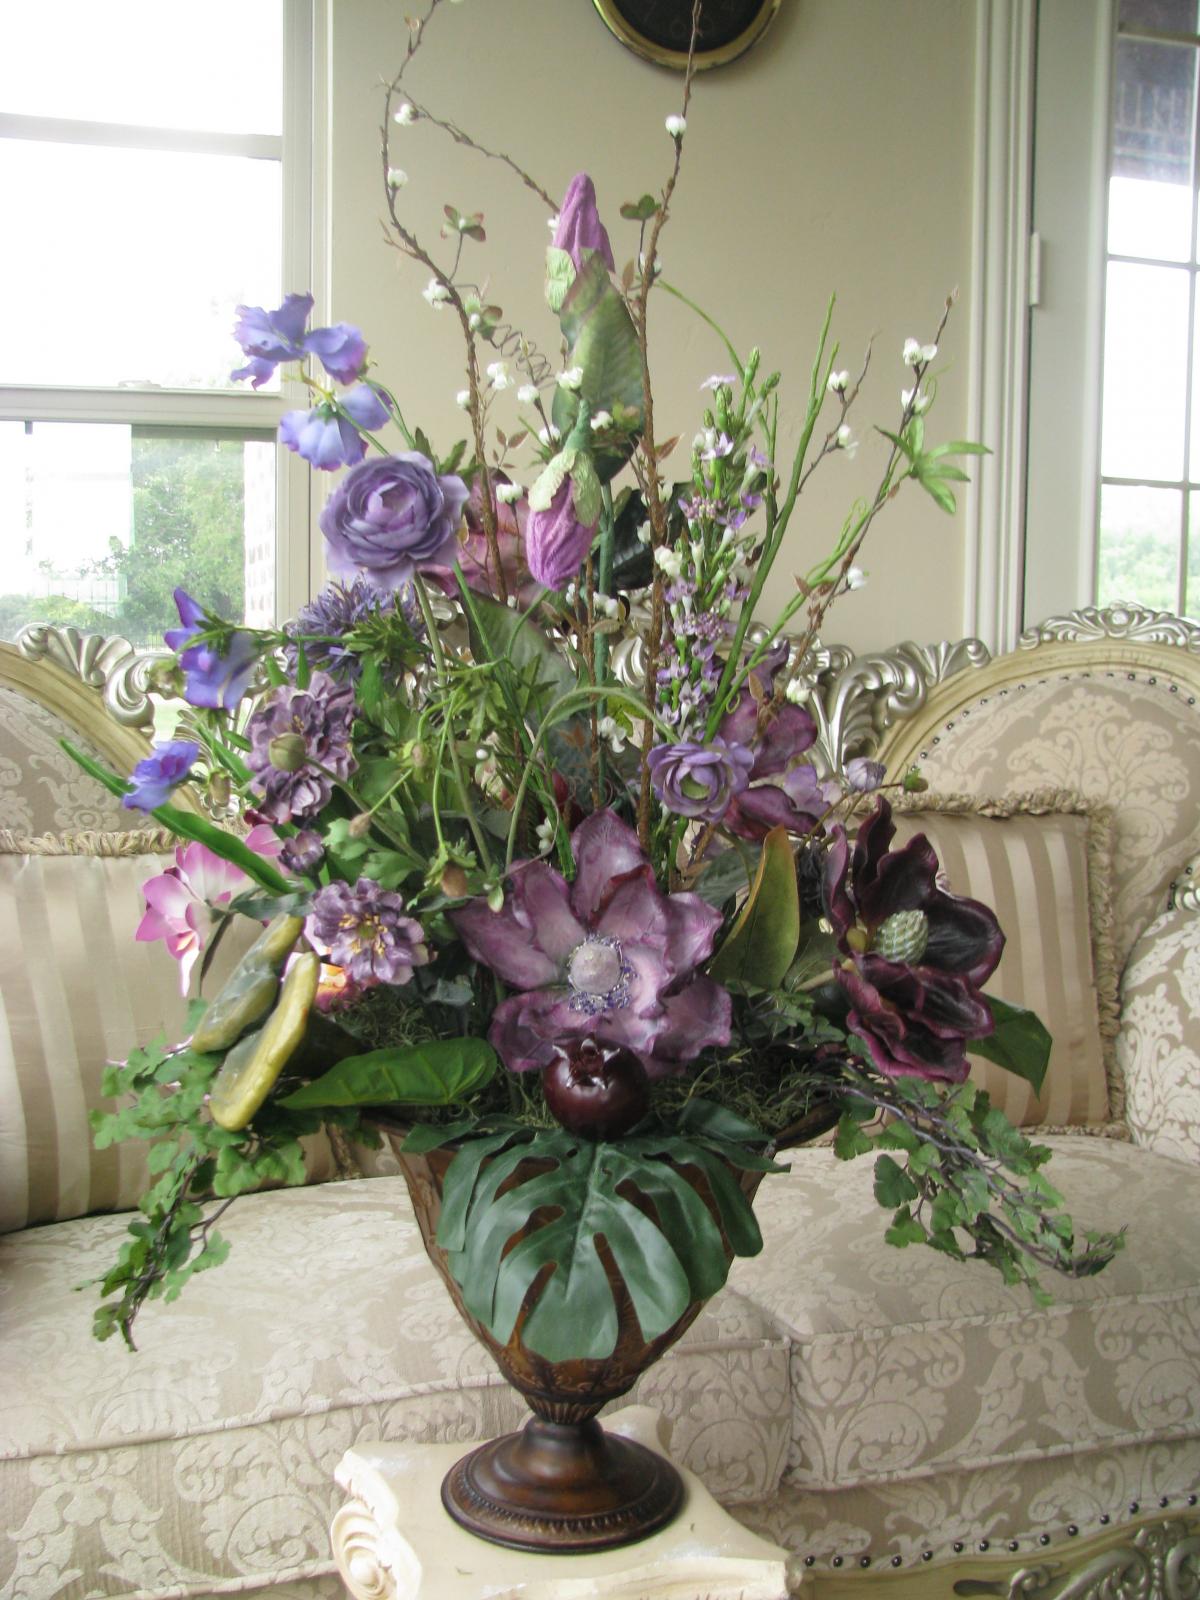 Sale 100 OFF Silk Purple EXOTIC Floral Arrangement Ornate Tin Rustic